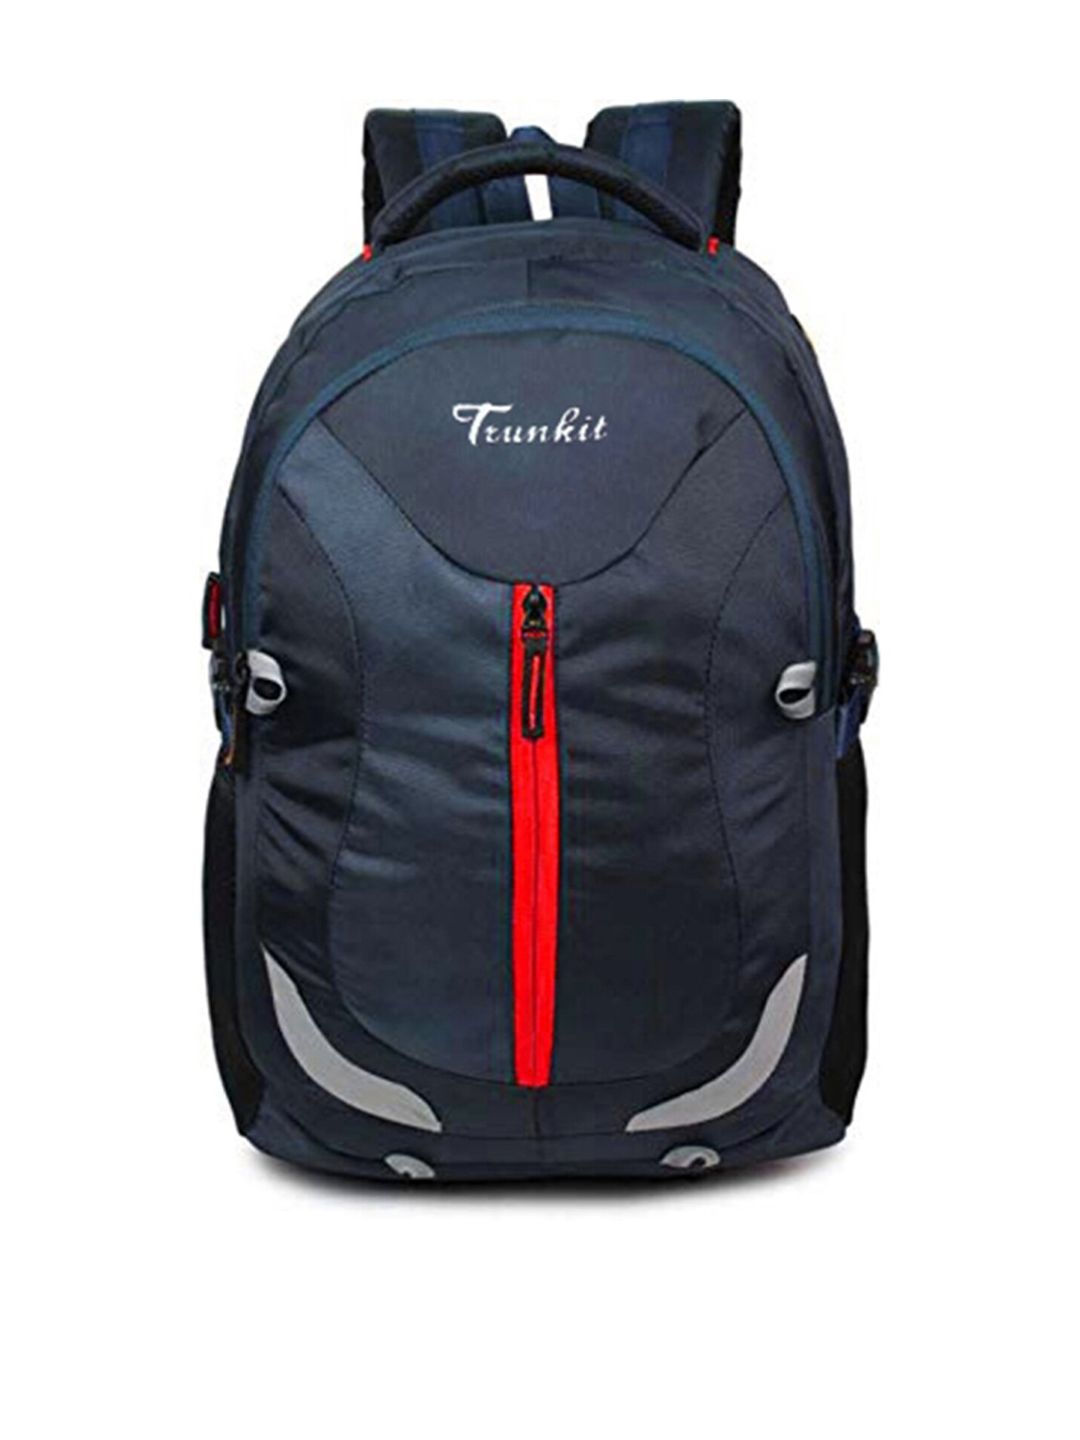 TRUNKIT Unisex Navy Blue & Orange Laptop Backpack Price in India